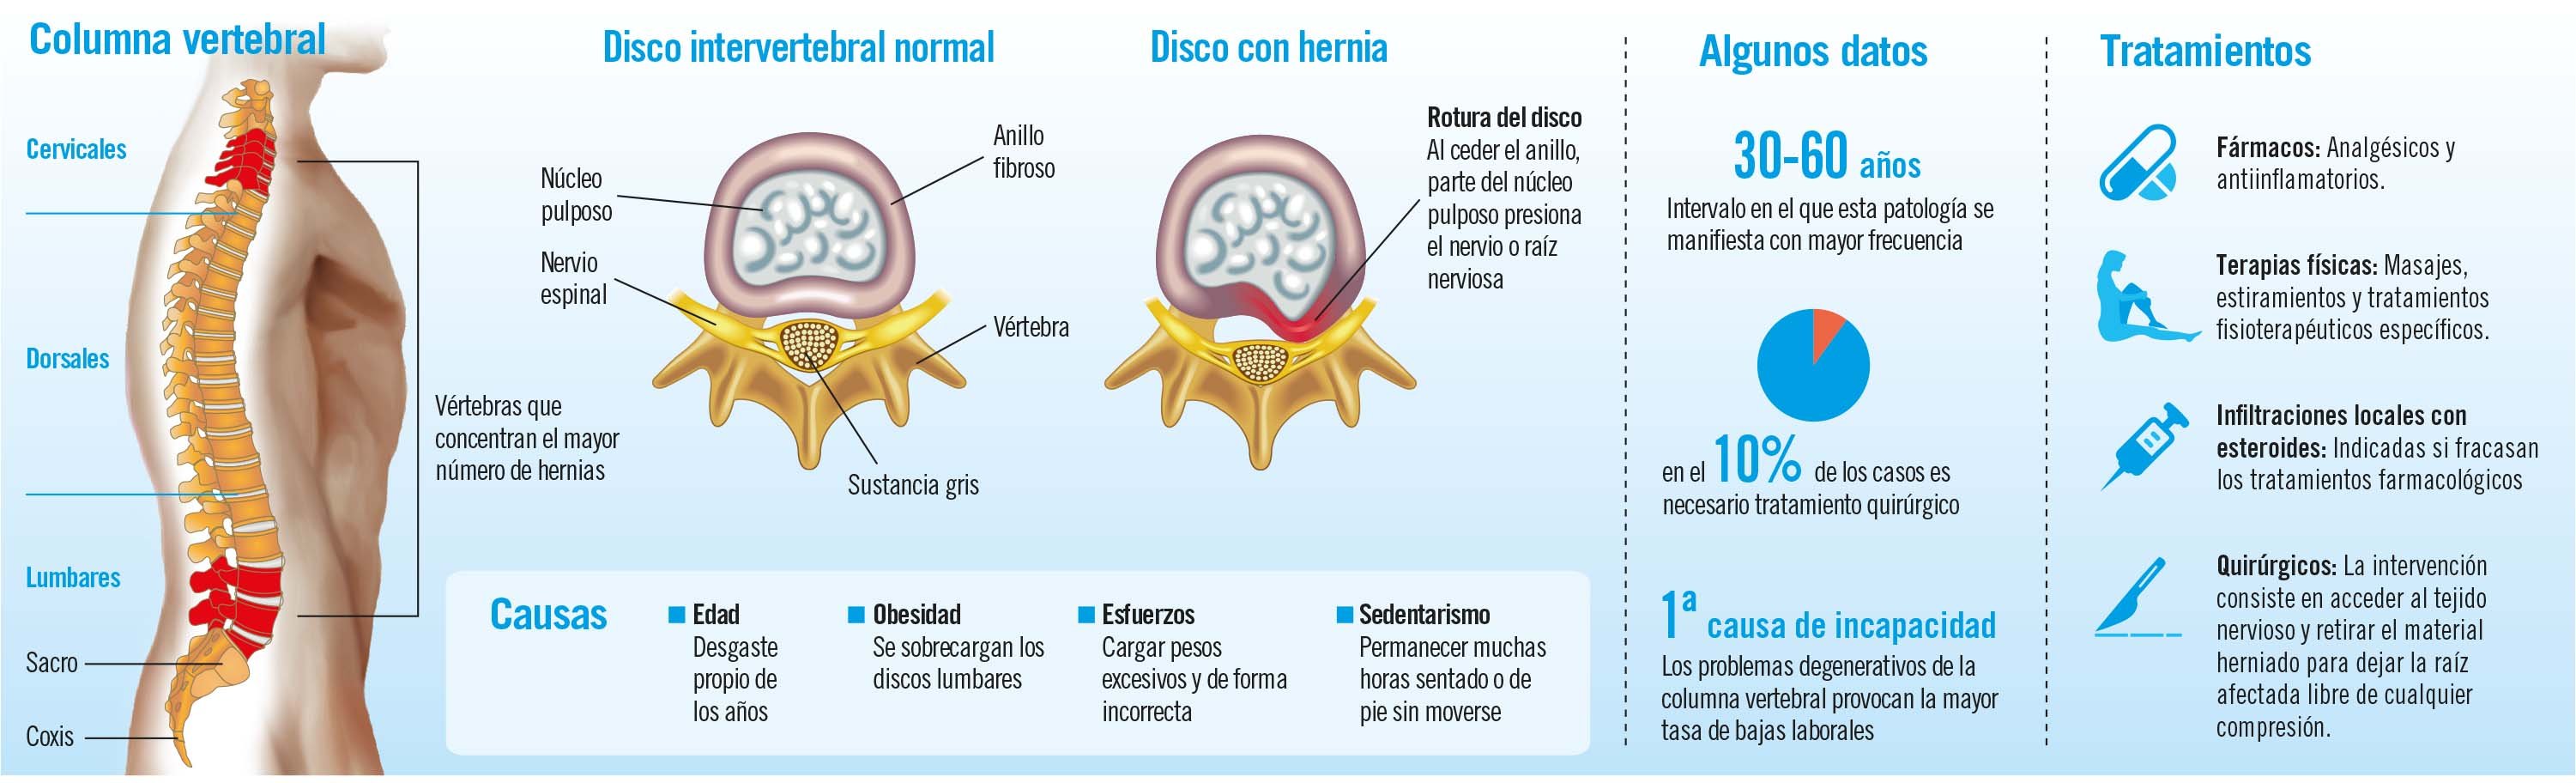 Hernia discal: síntomas, causas y tratamiento. Neurocirujano Sevilla